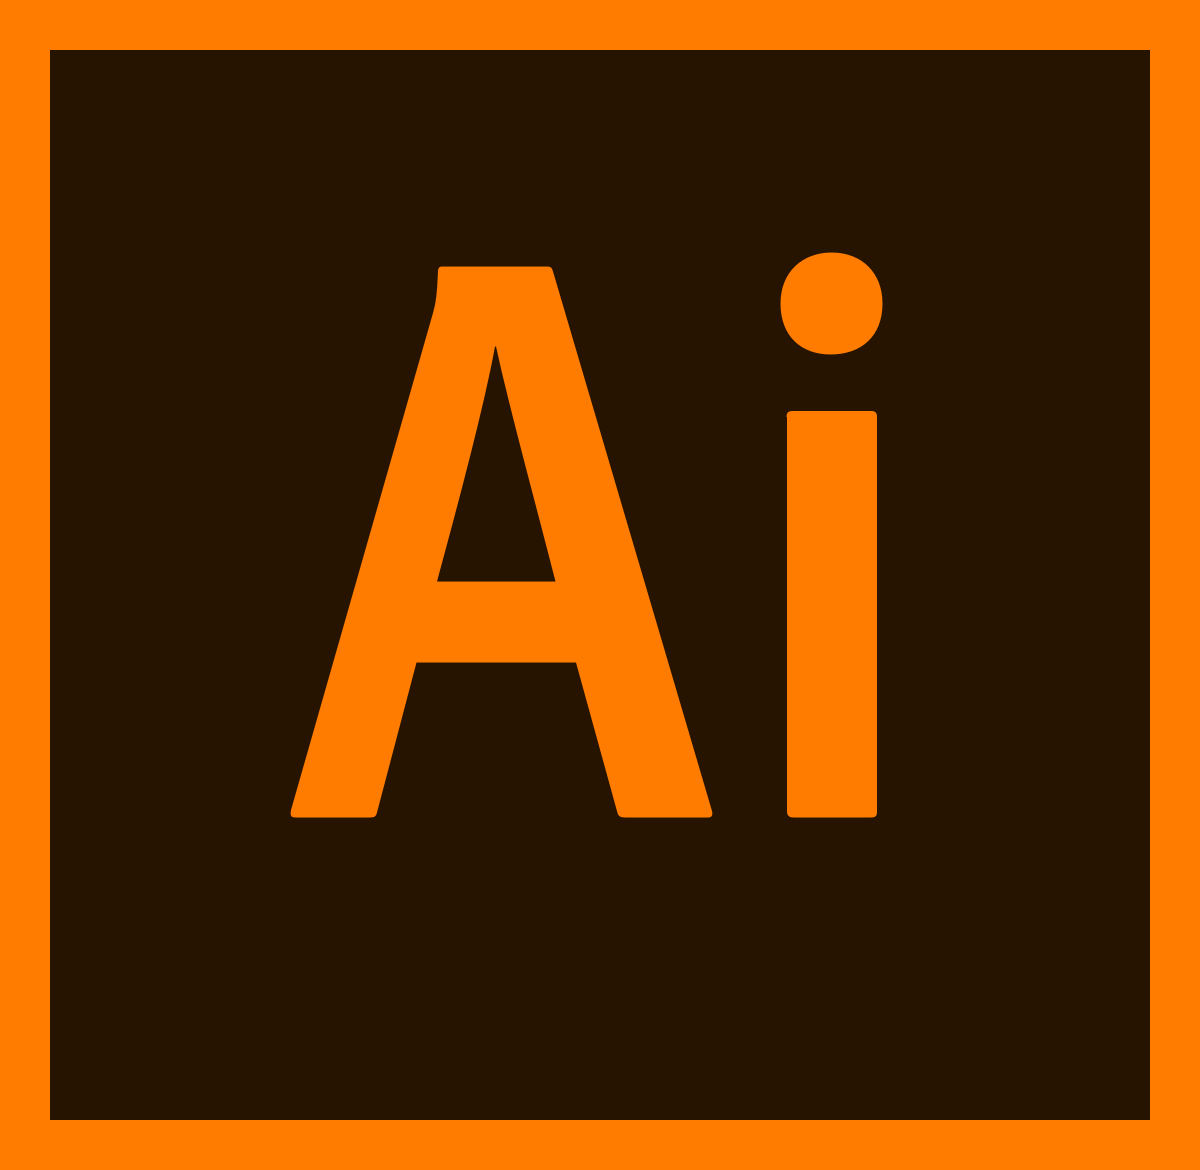 Illustrator Logo - Adobe Illustrator